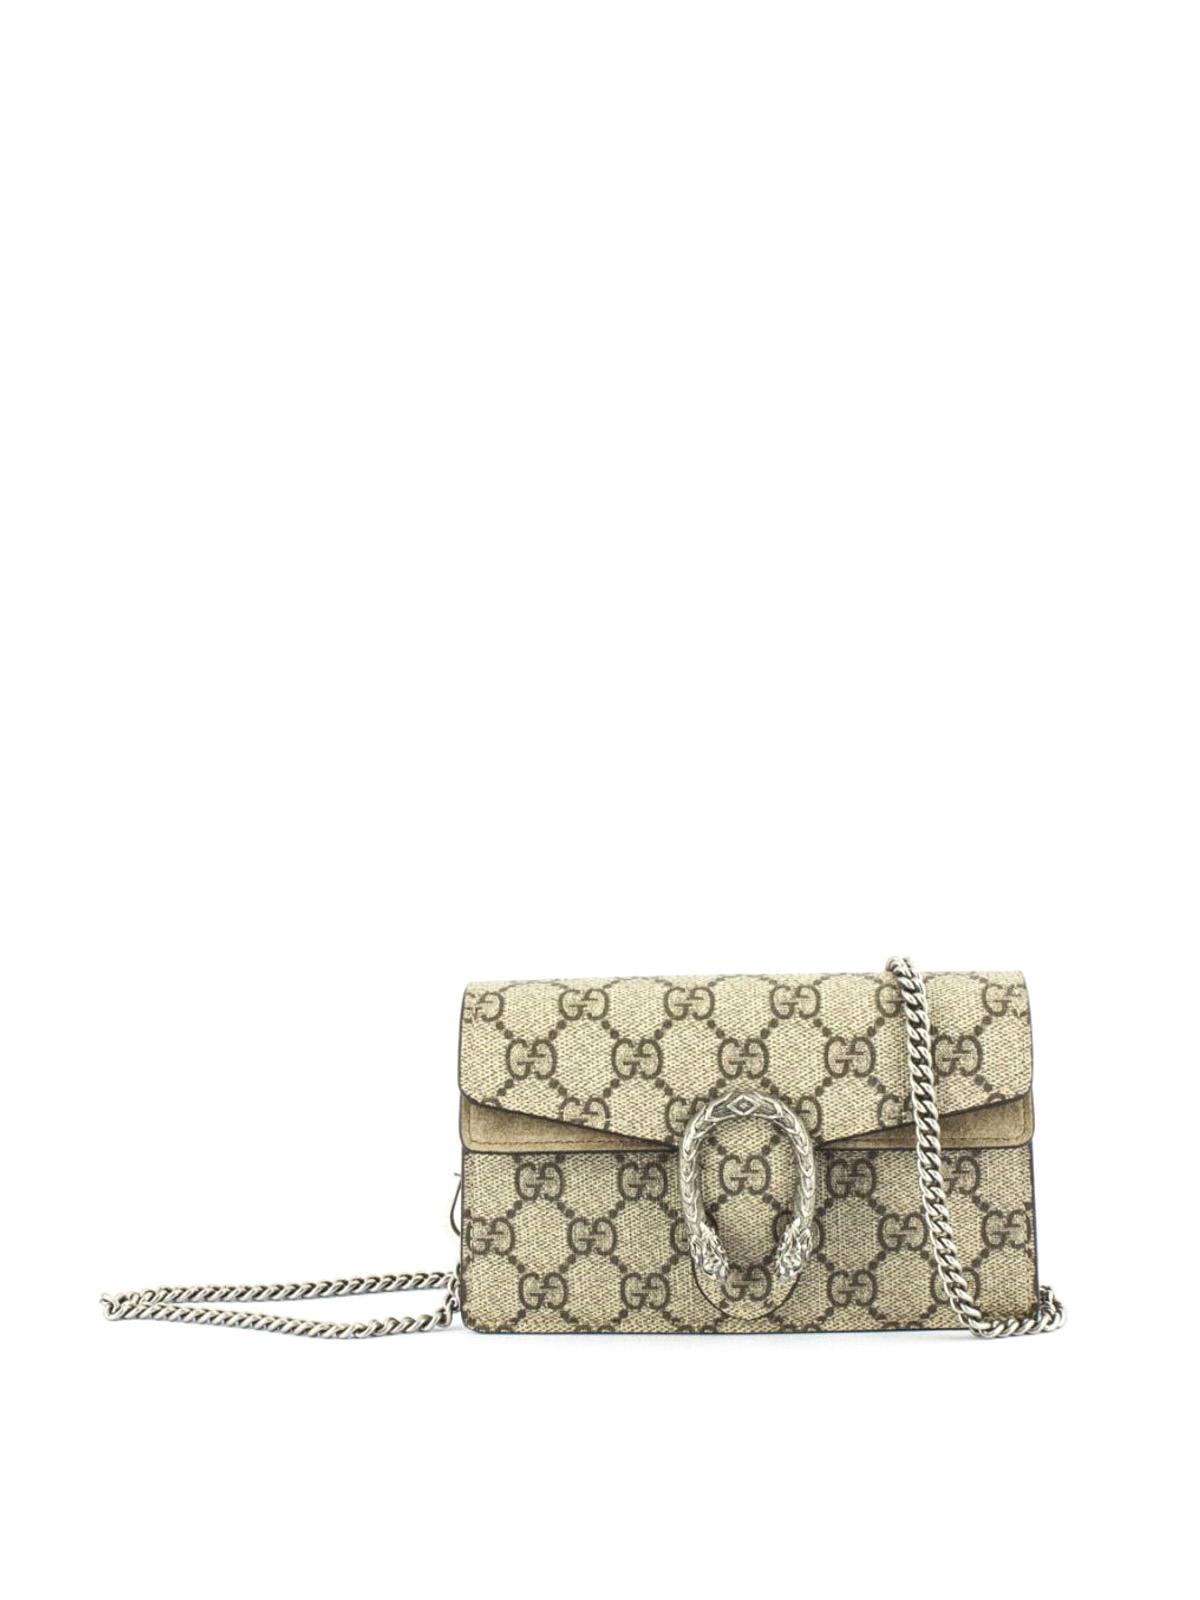 Gucci - Dionysus GG Supreme mini bag 